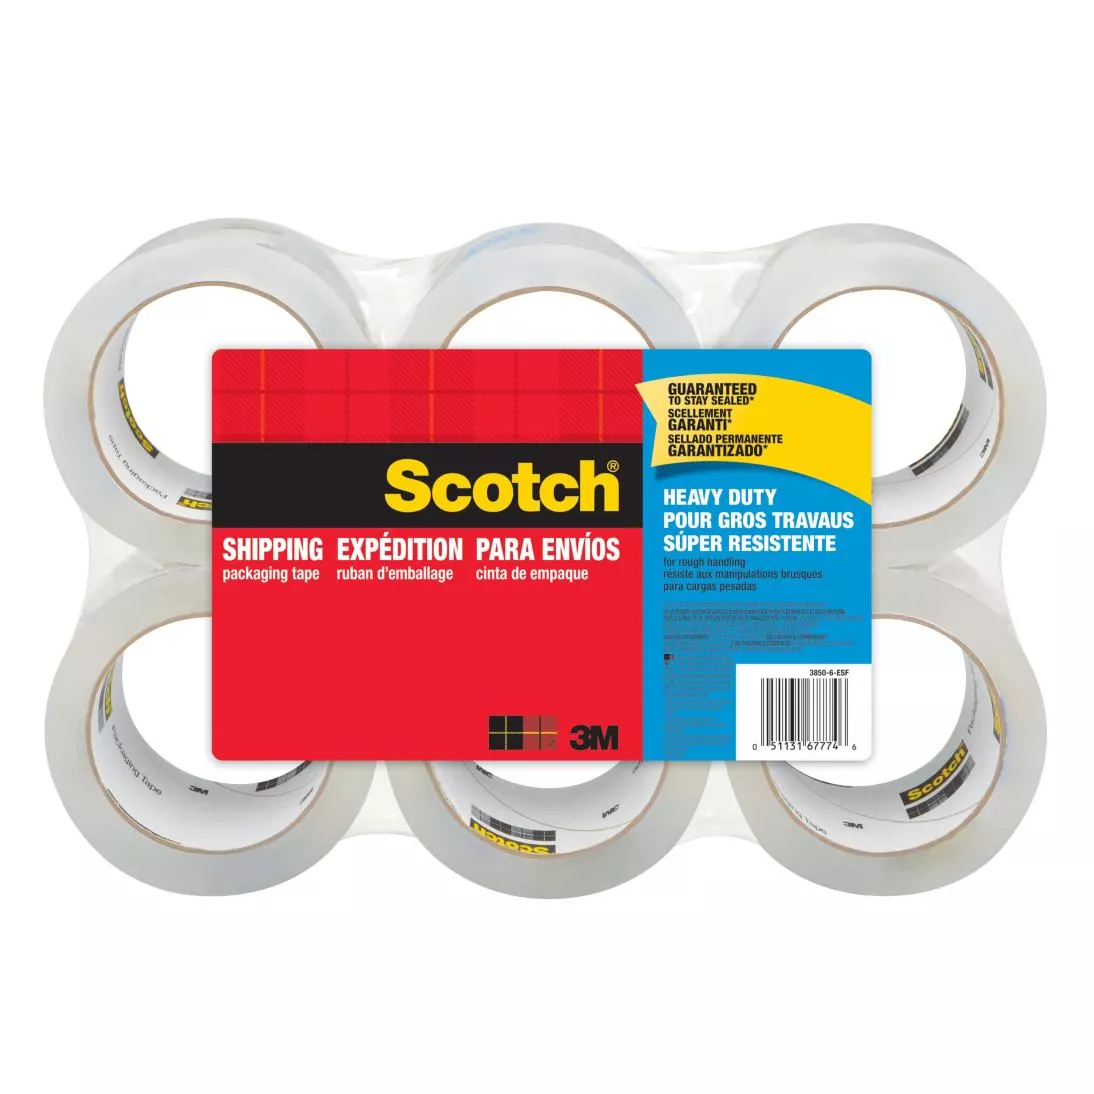 Scotch® Packaging Tape 3850-6-EF, 1.88 in x 54.6 yd (48mm x 50 m) Heavy Duty Shipping, 6 Pack